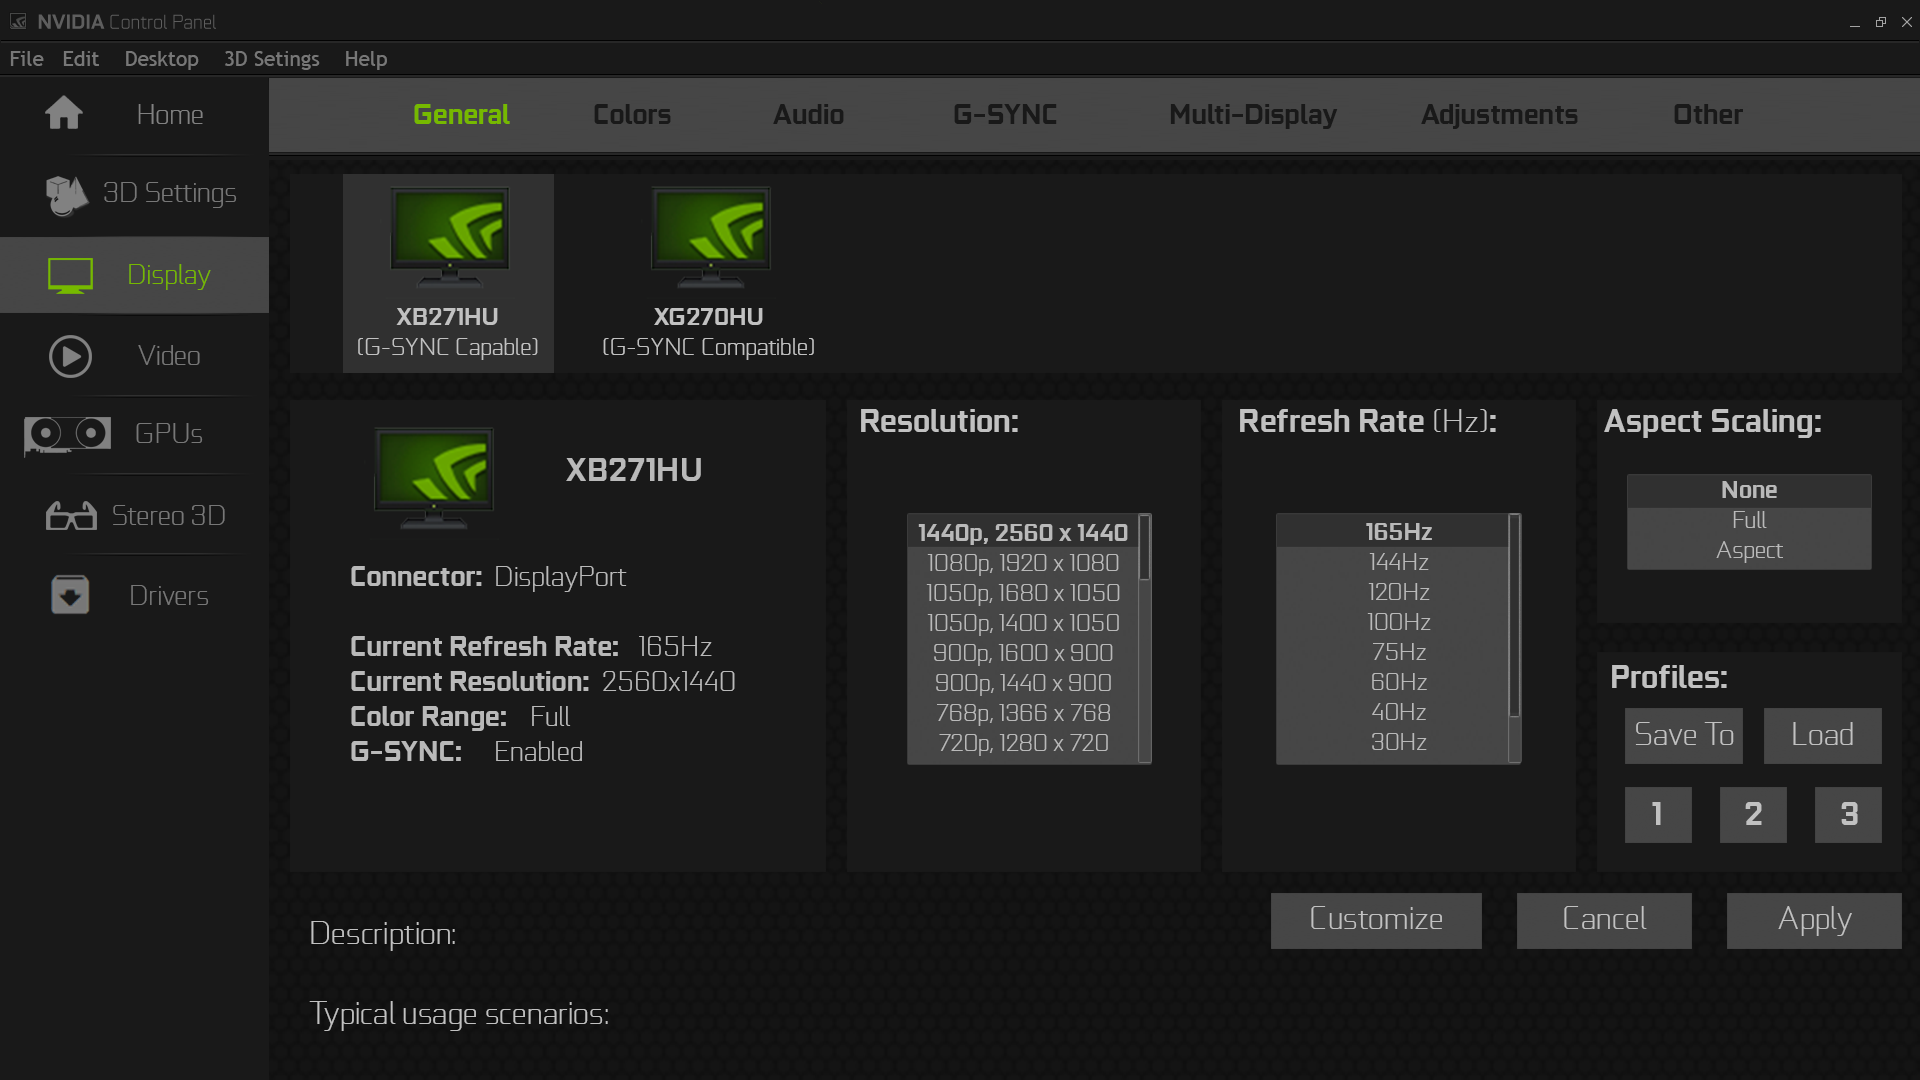 nvidia control panel download